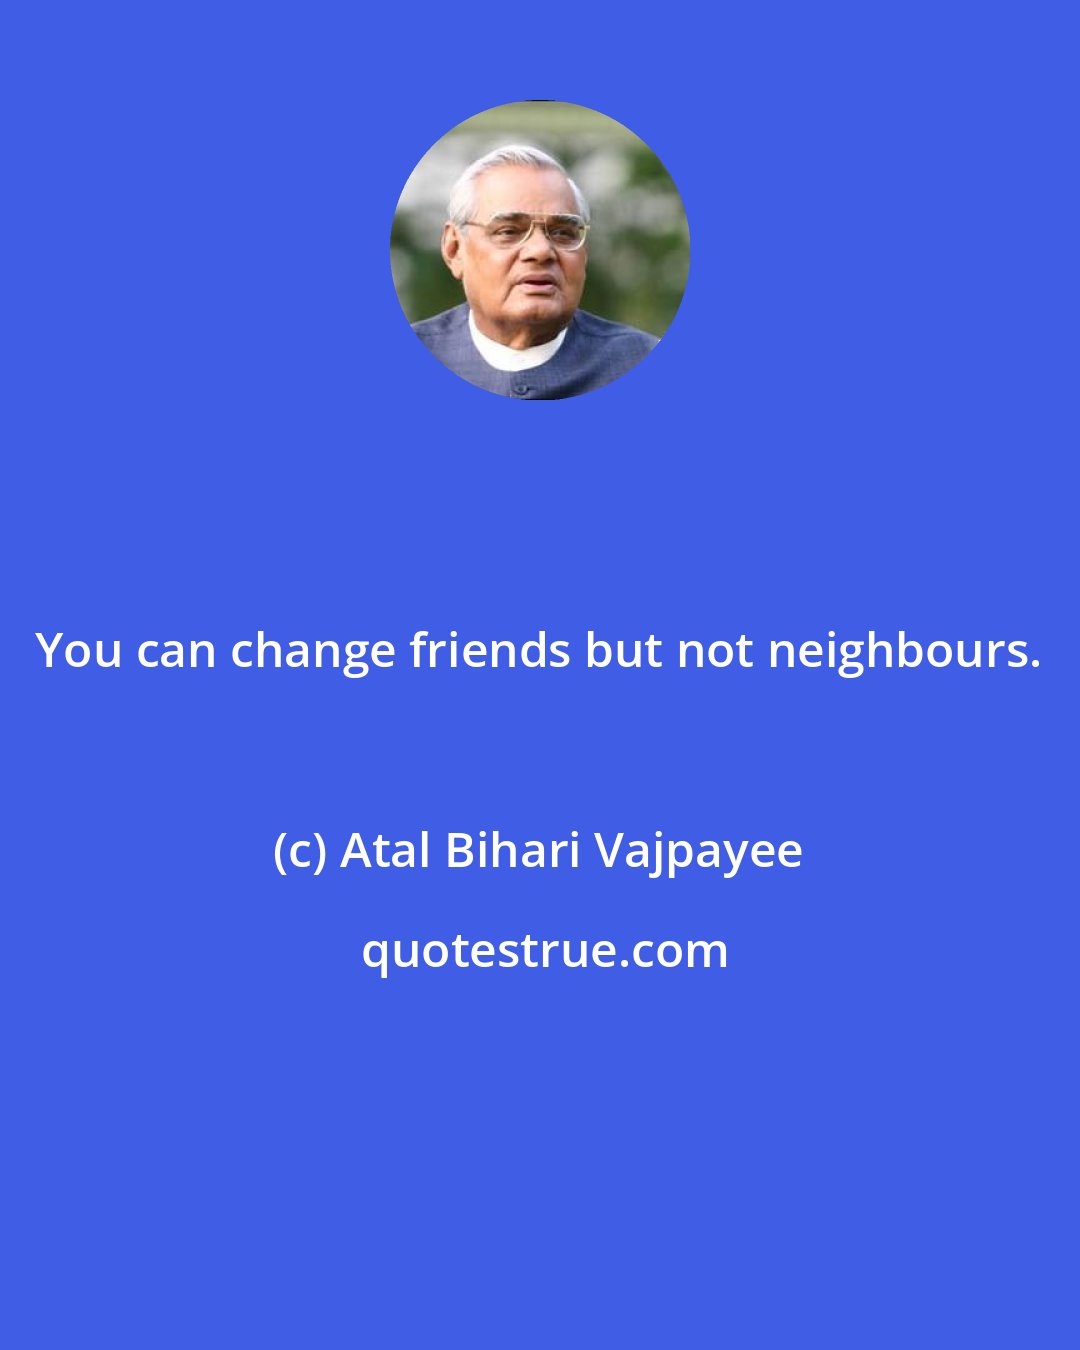 Atal Bihari Vajpayee: You can change friends but not neighbours.